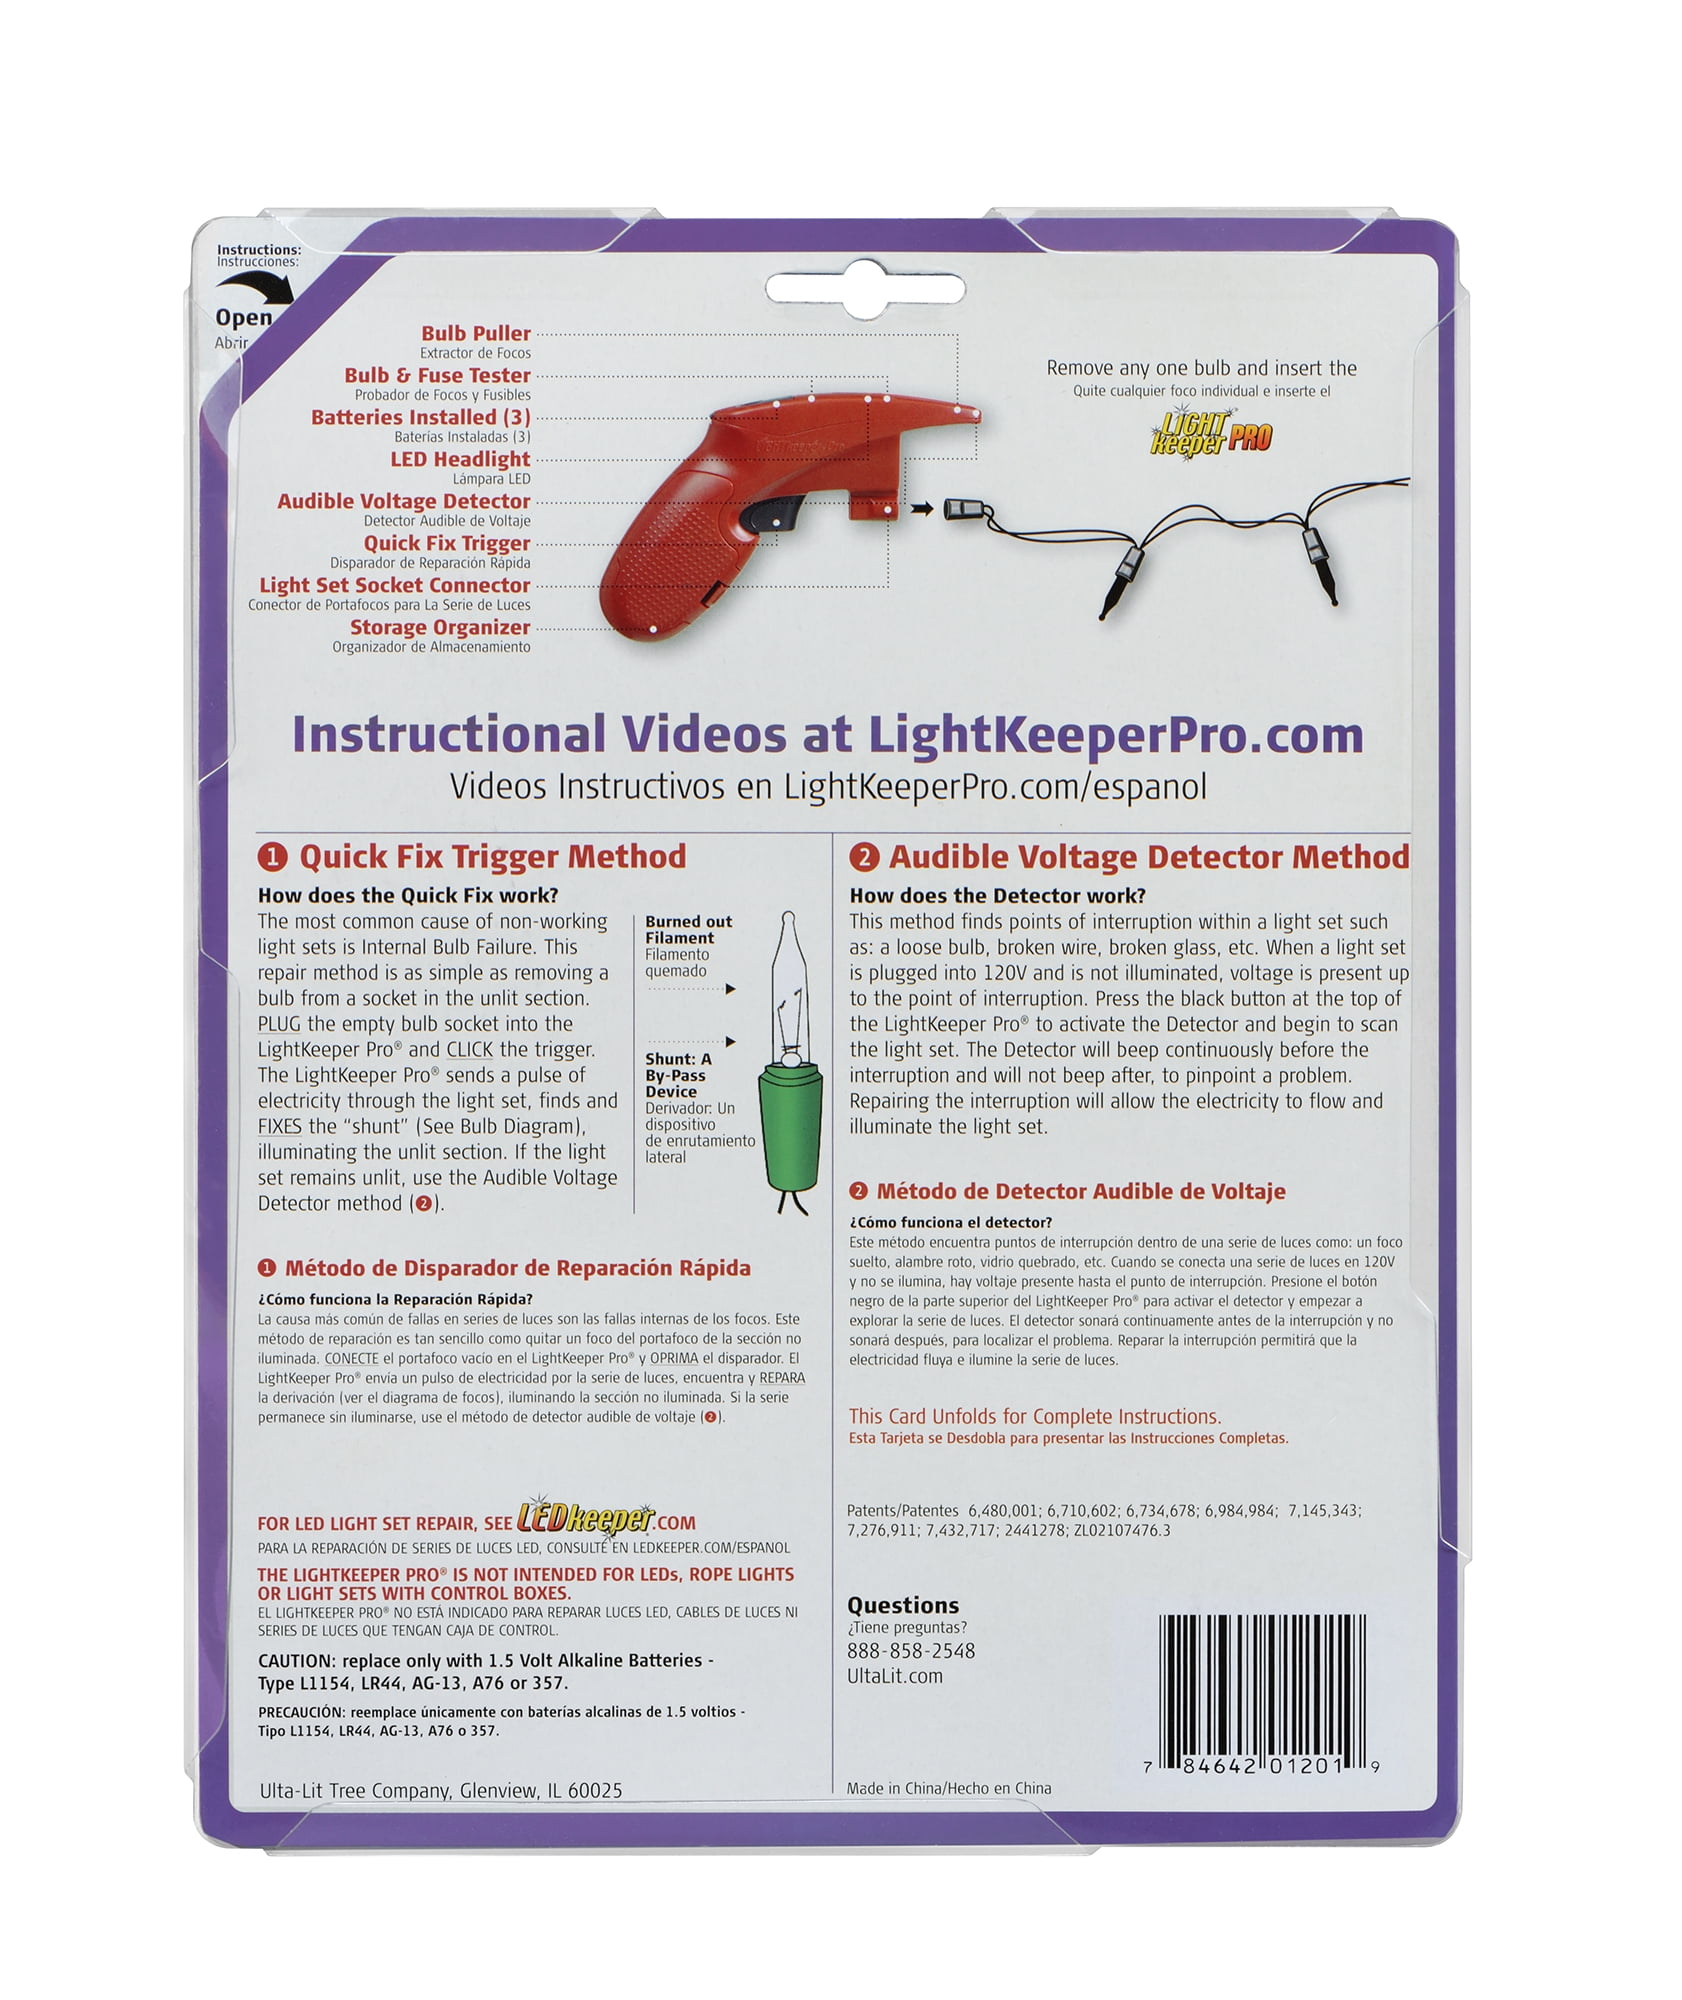 Ulta-Lit LightKeeper Pro Repair Tool for Incandescent Light Sets